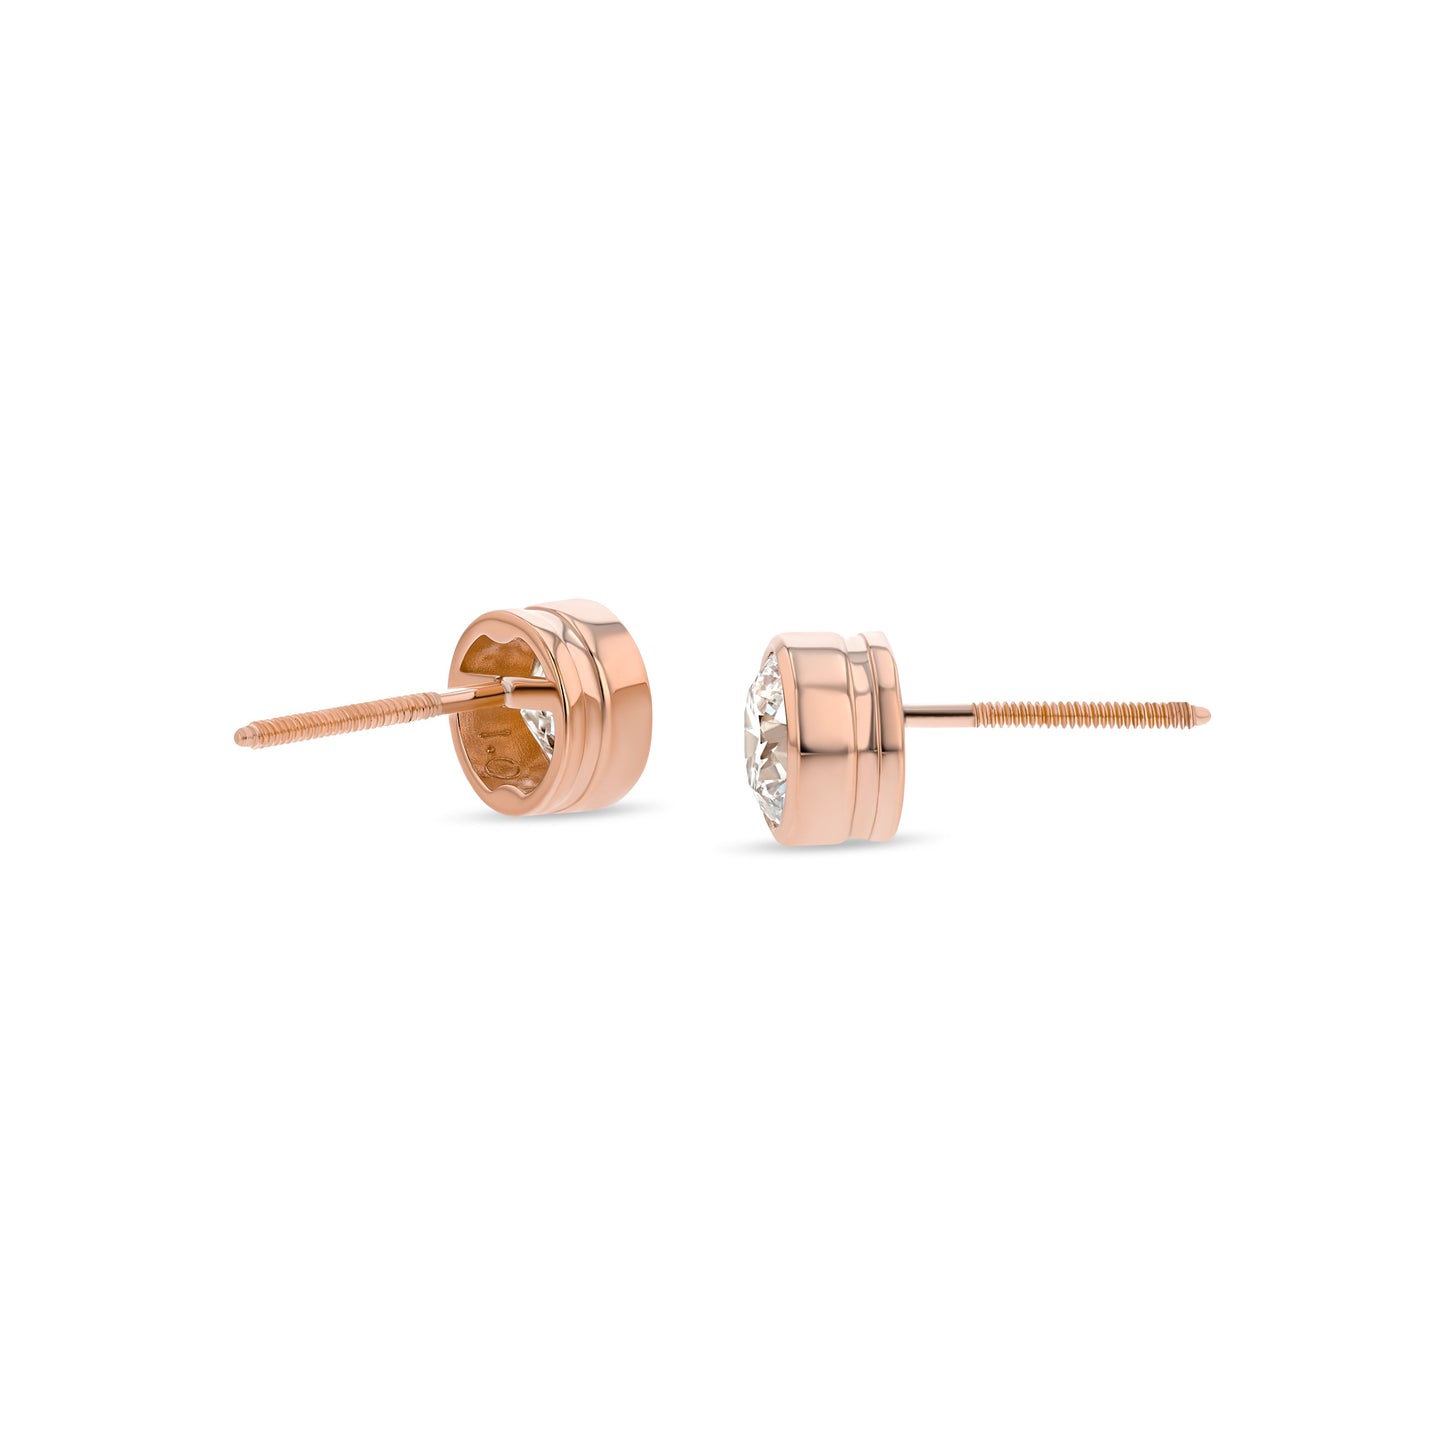 14k Rose Gold Bezel Set Round Brilliant Diamond Stud Earrings (1 Ct. T.w., Si1-si2 Clarity, J-k Color)